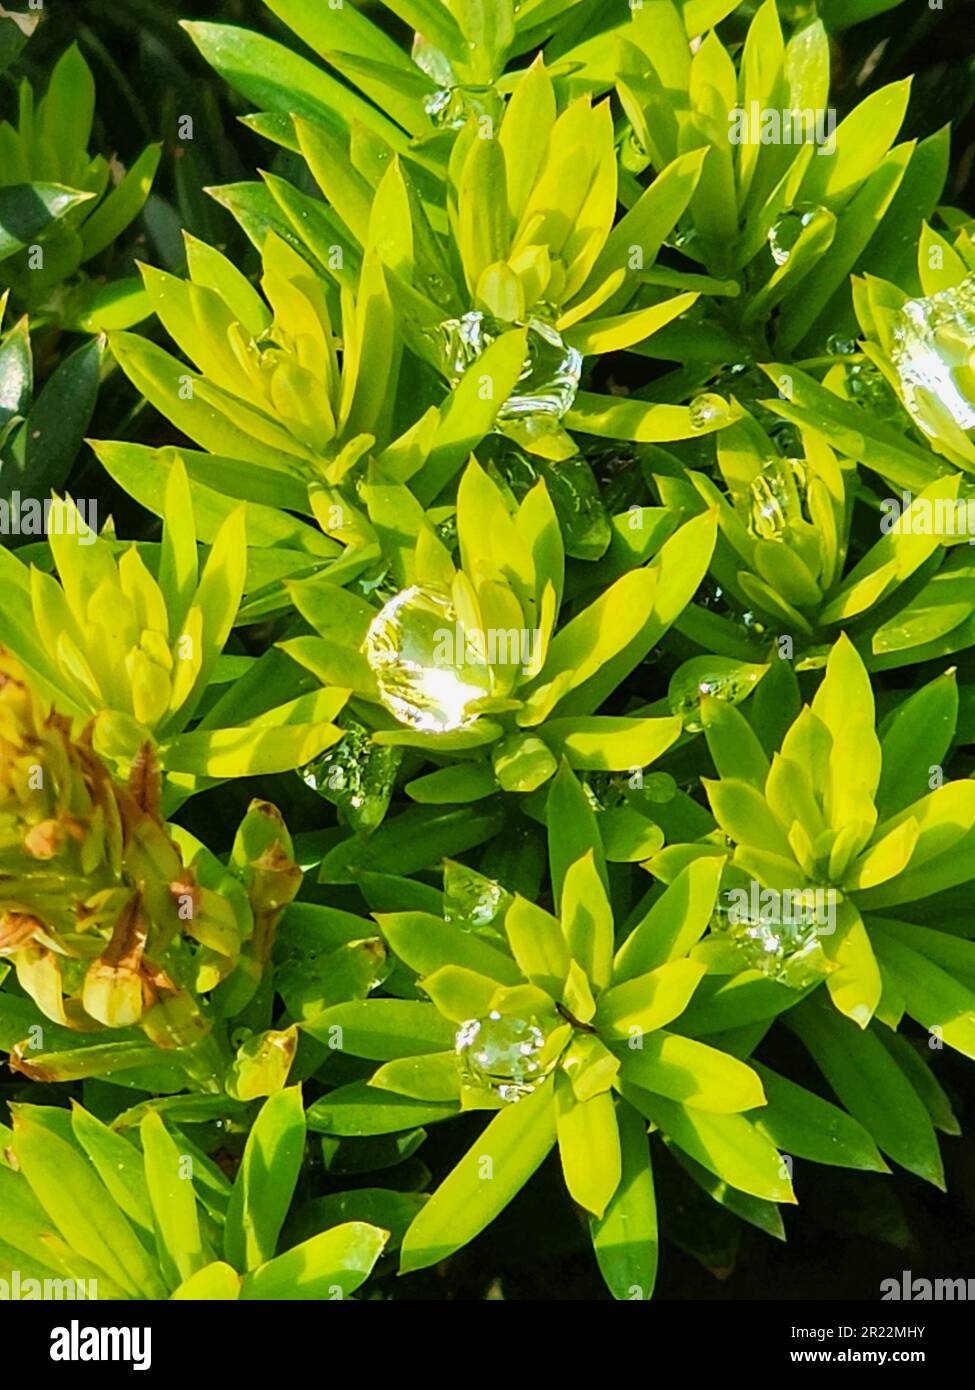 Water tension rain drops on Japanese Yew (Taxus cispidata) Stock Photo